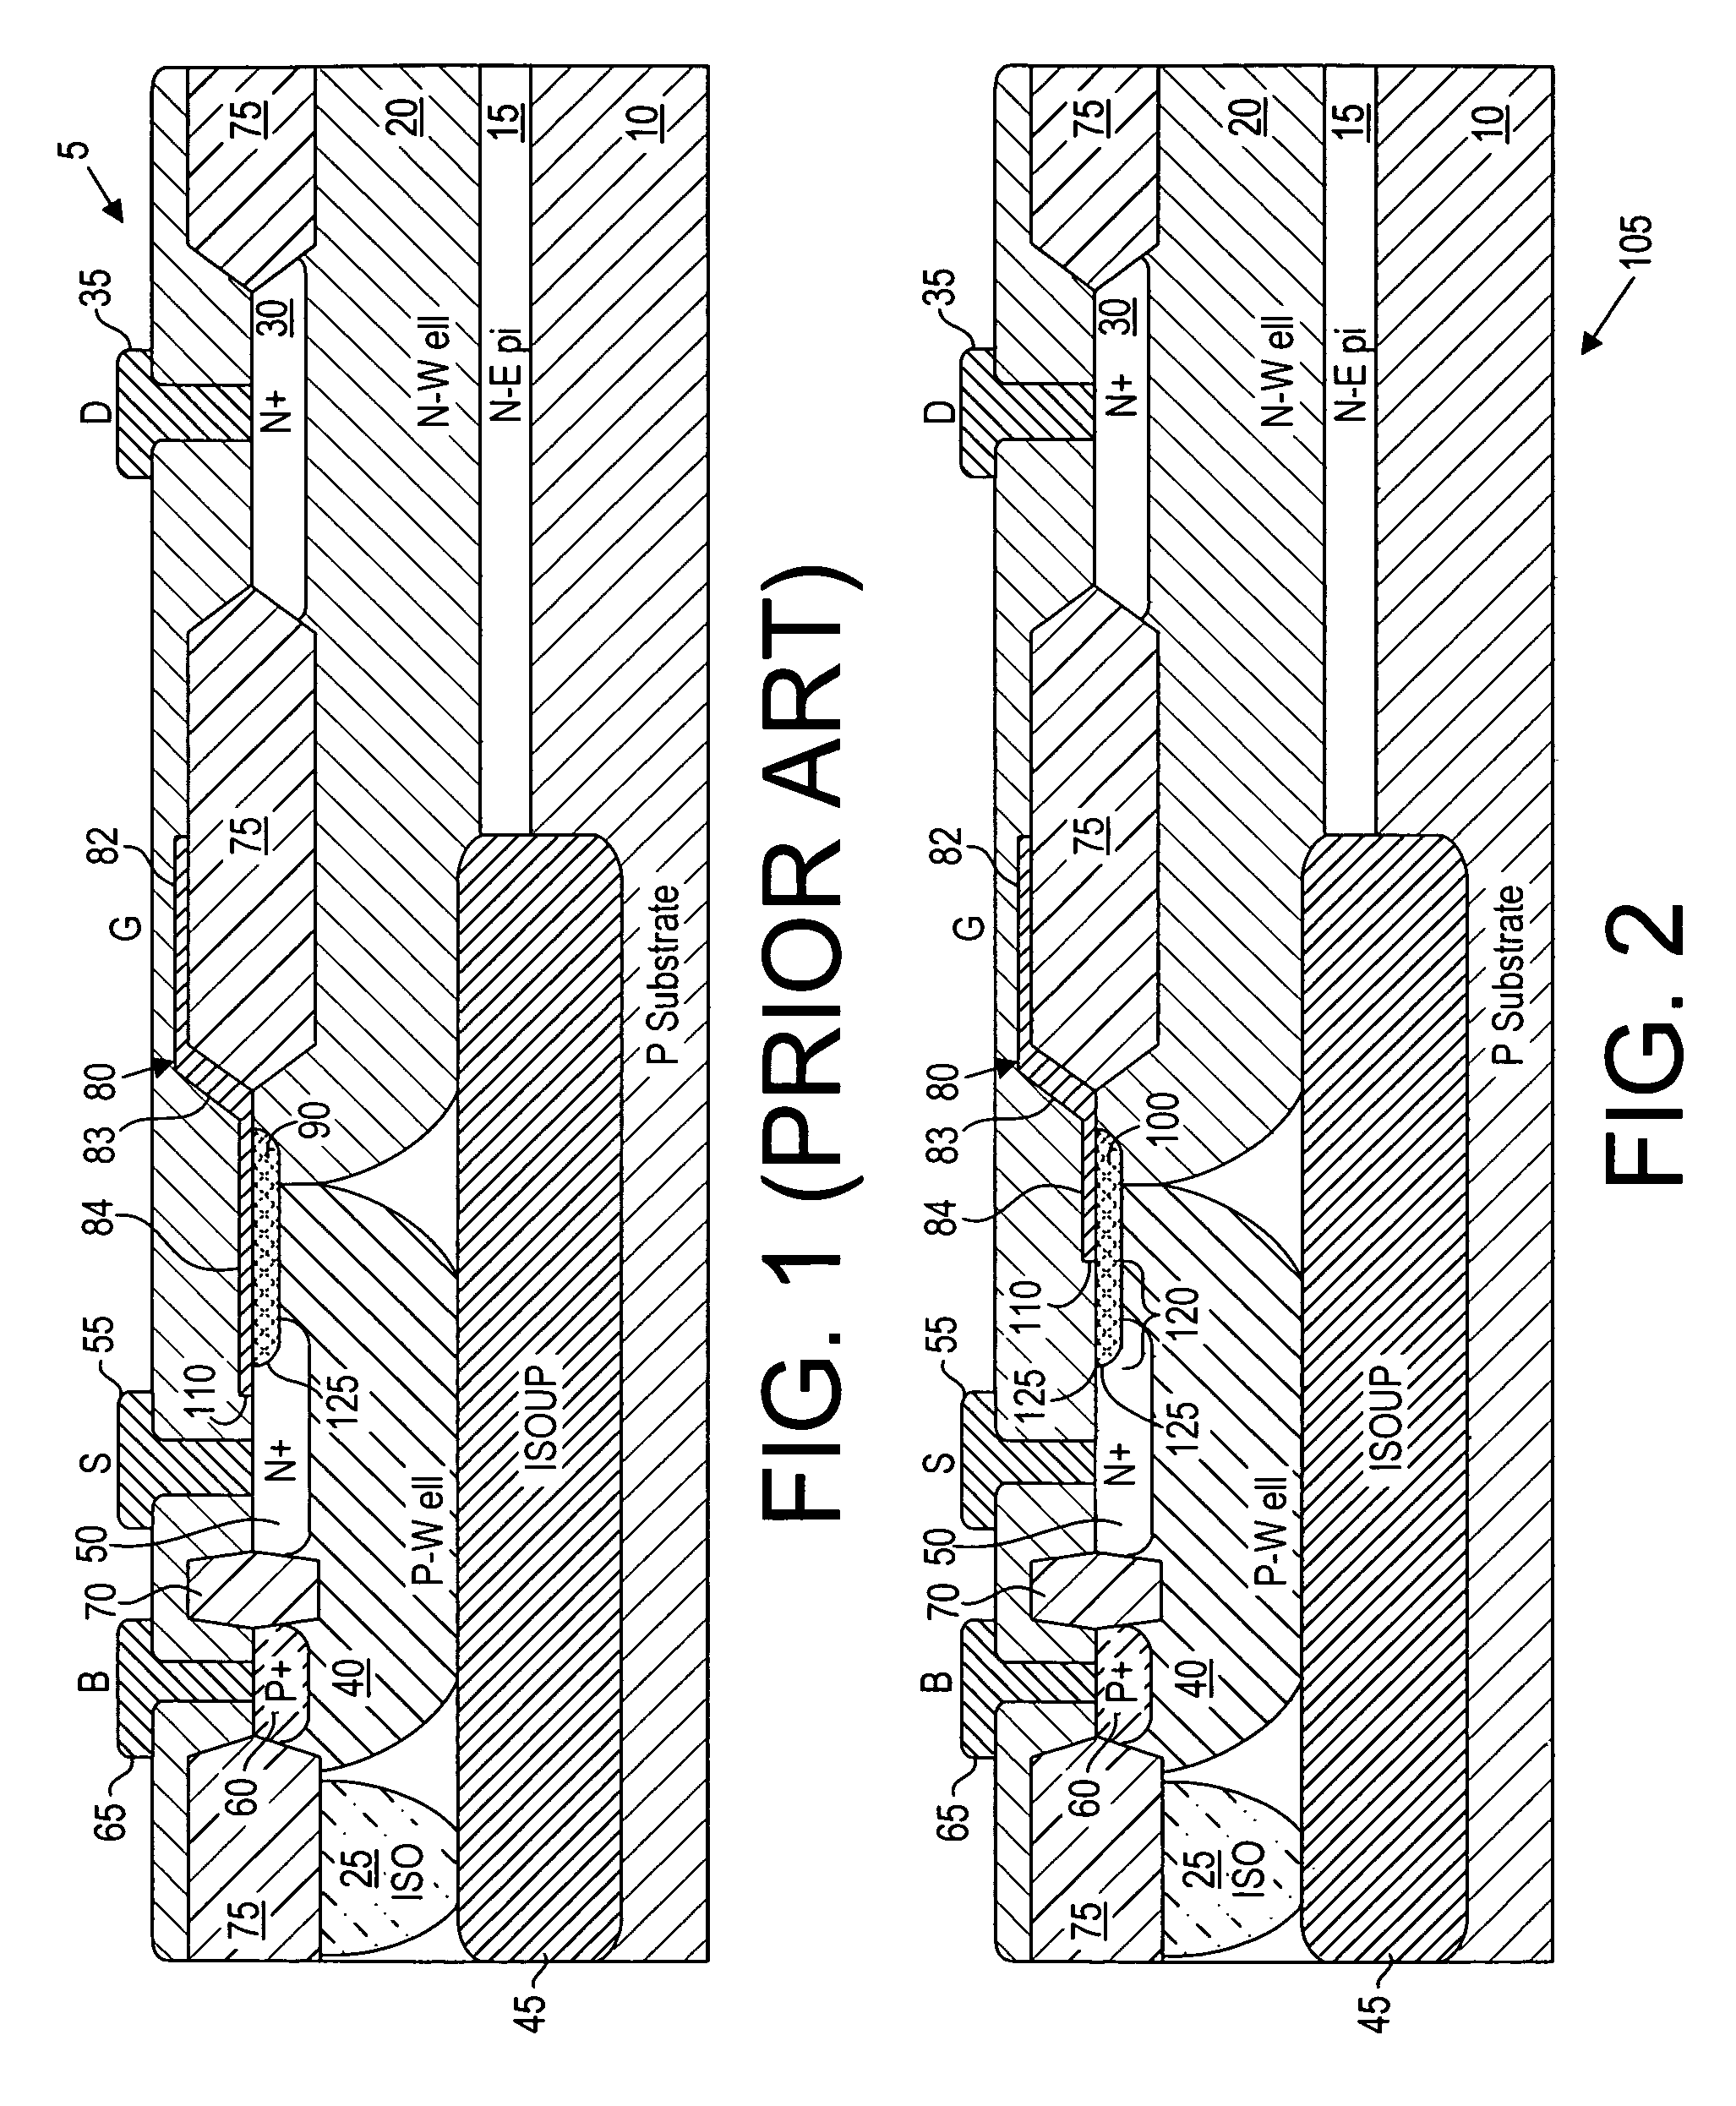 Ballast resistors for transistor devices